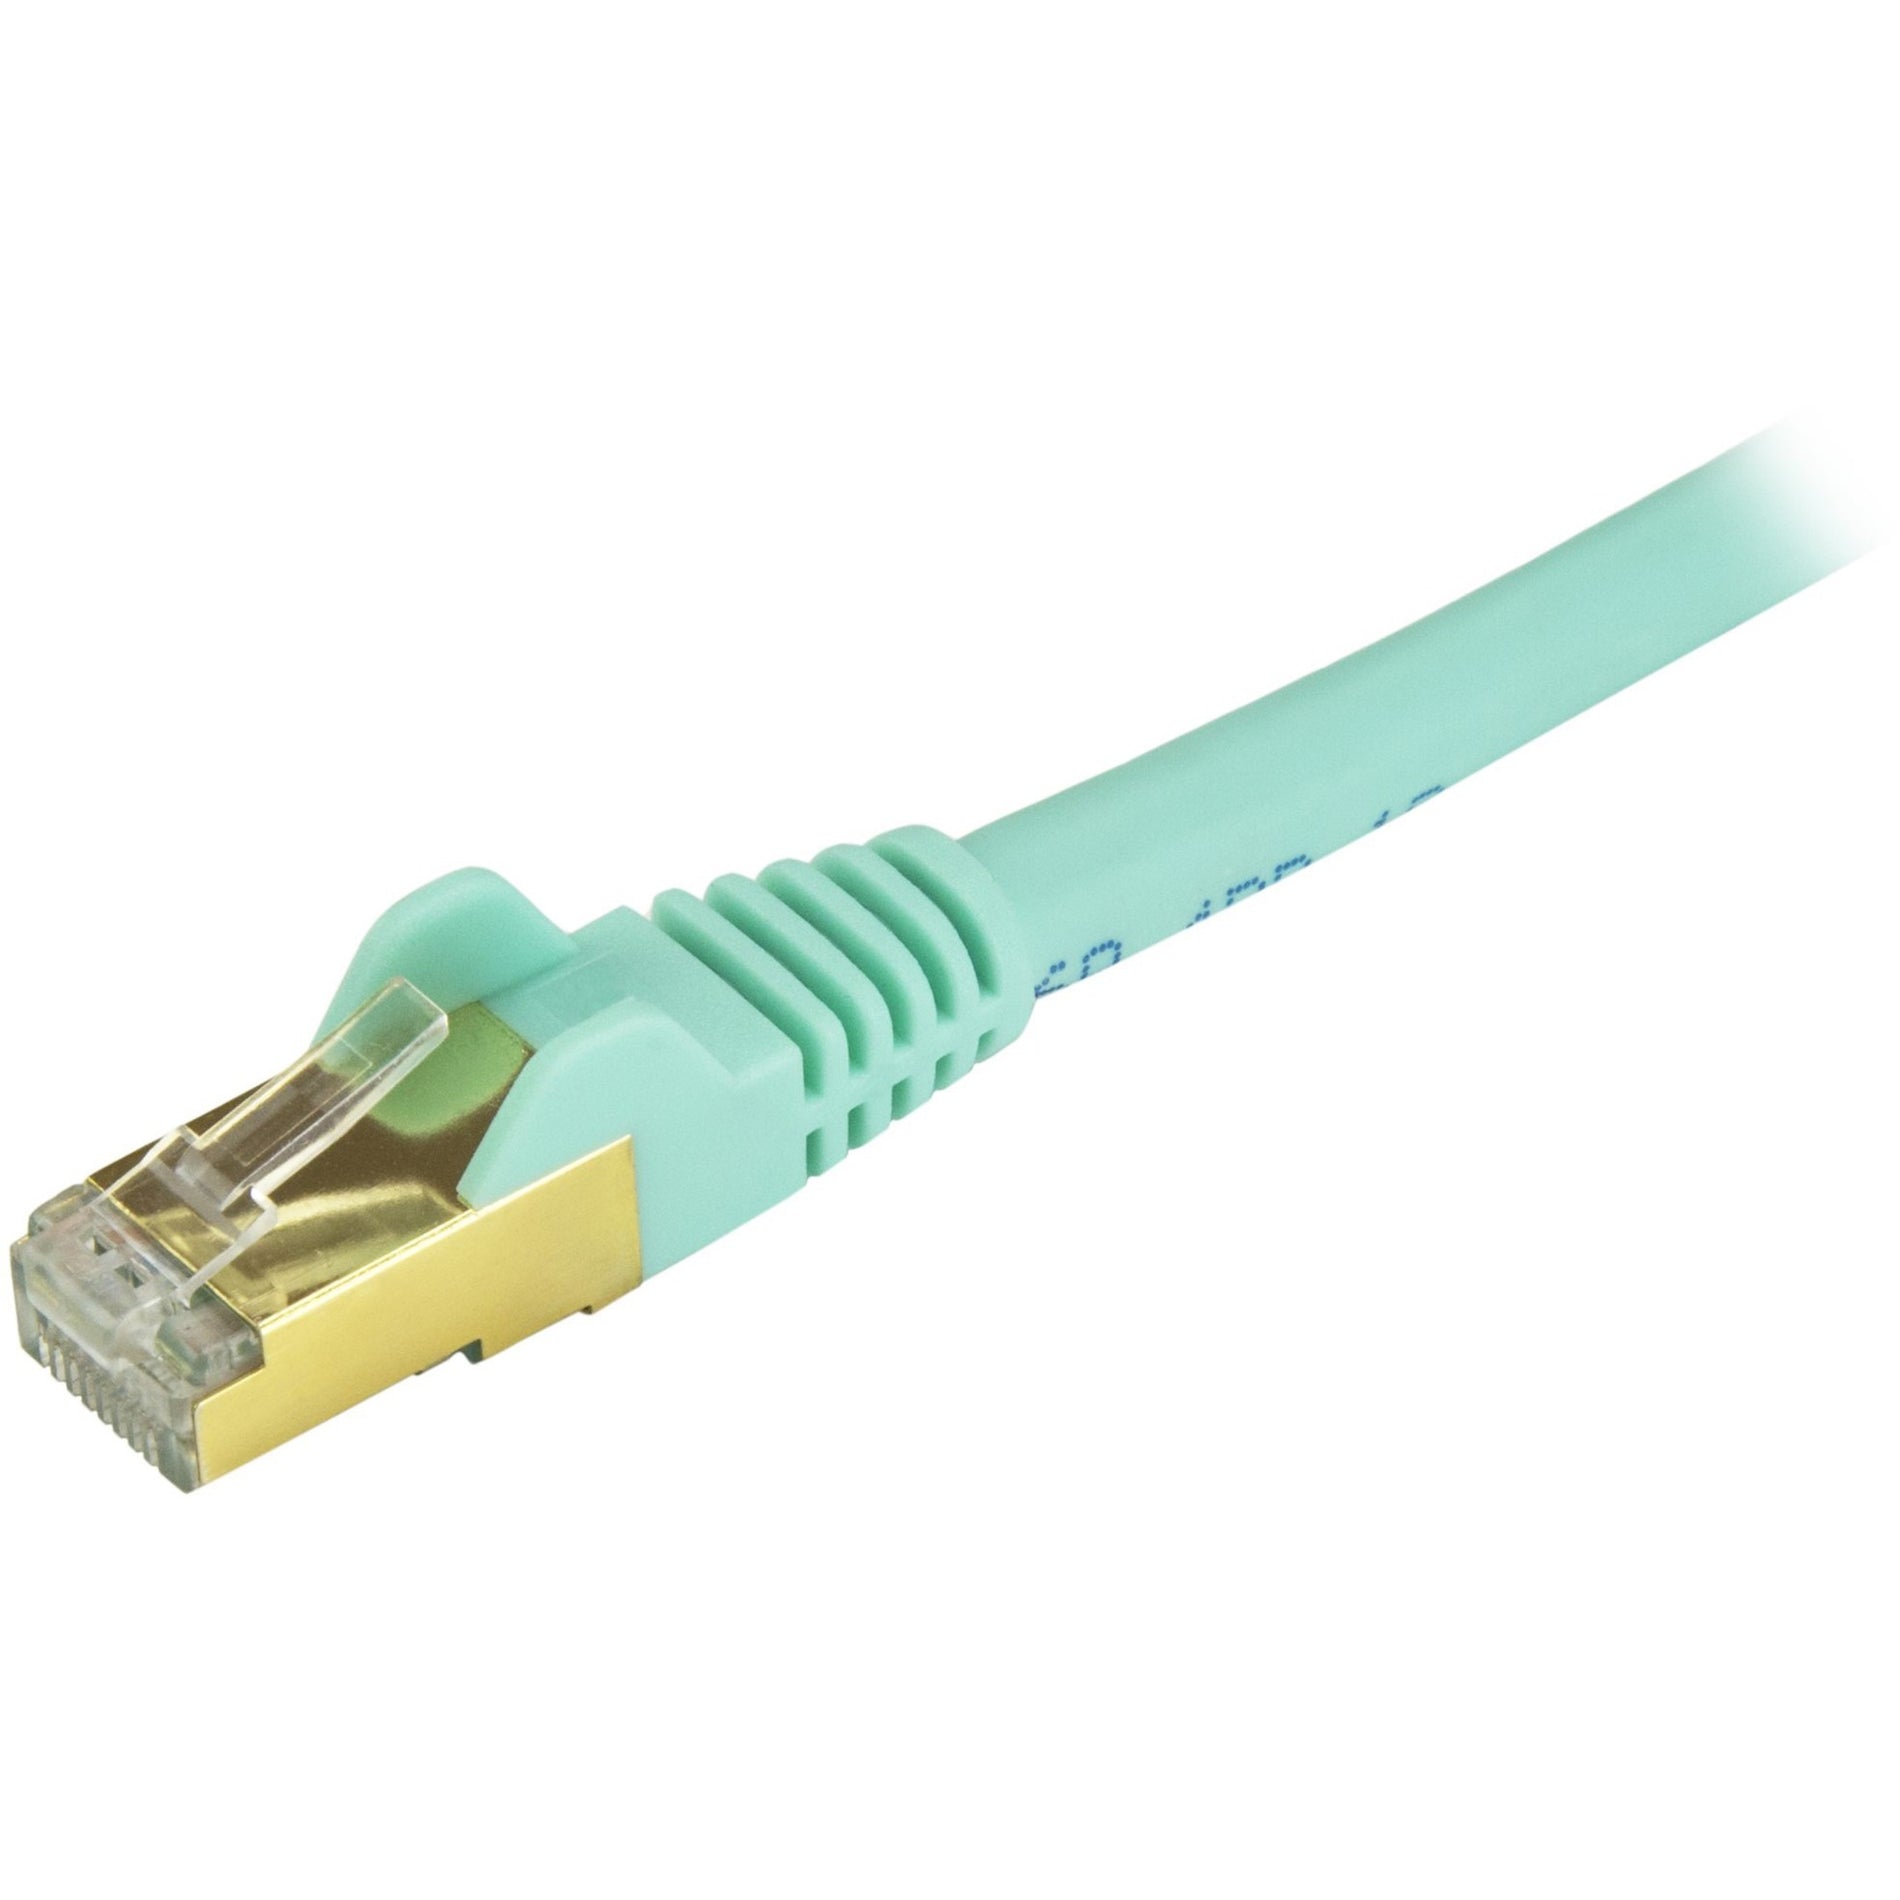 StarTech.com C6ASPAT8AQ Cat6a Ethernet Patch Cable - Shielded (STP) - 8 ft., Aqua, Snagless RJ45 Ethernet Cord